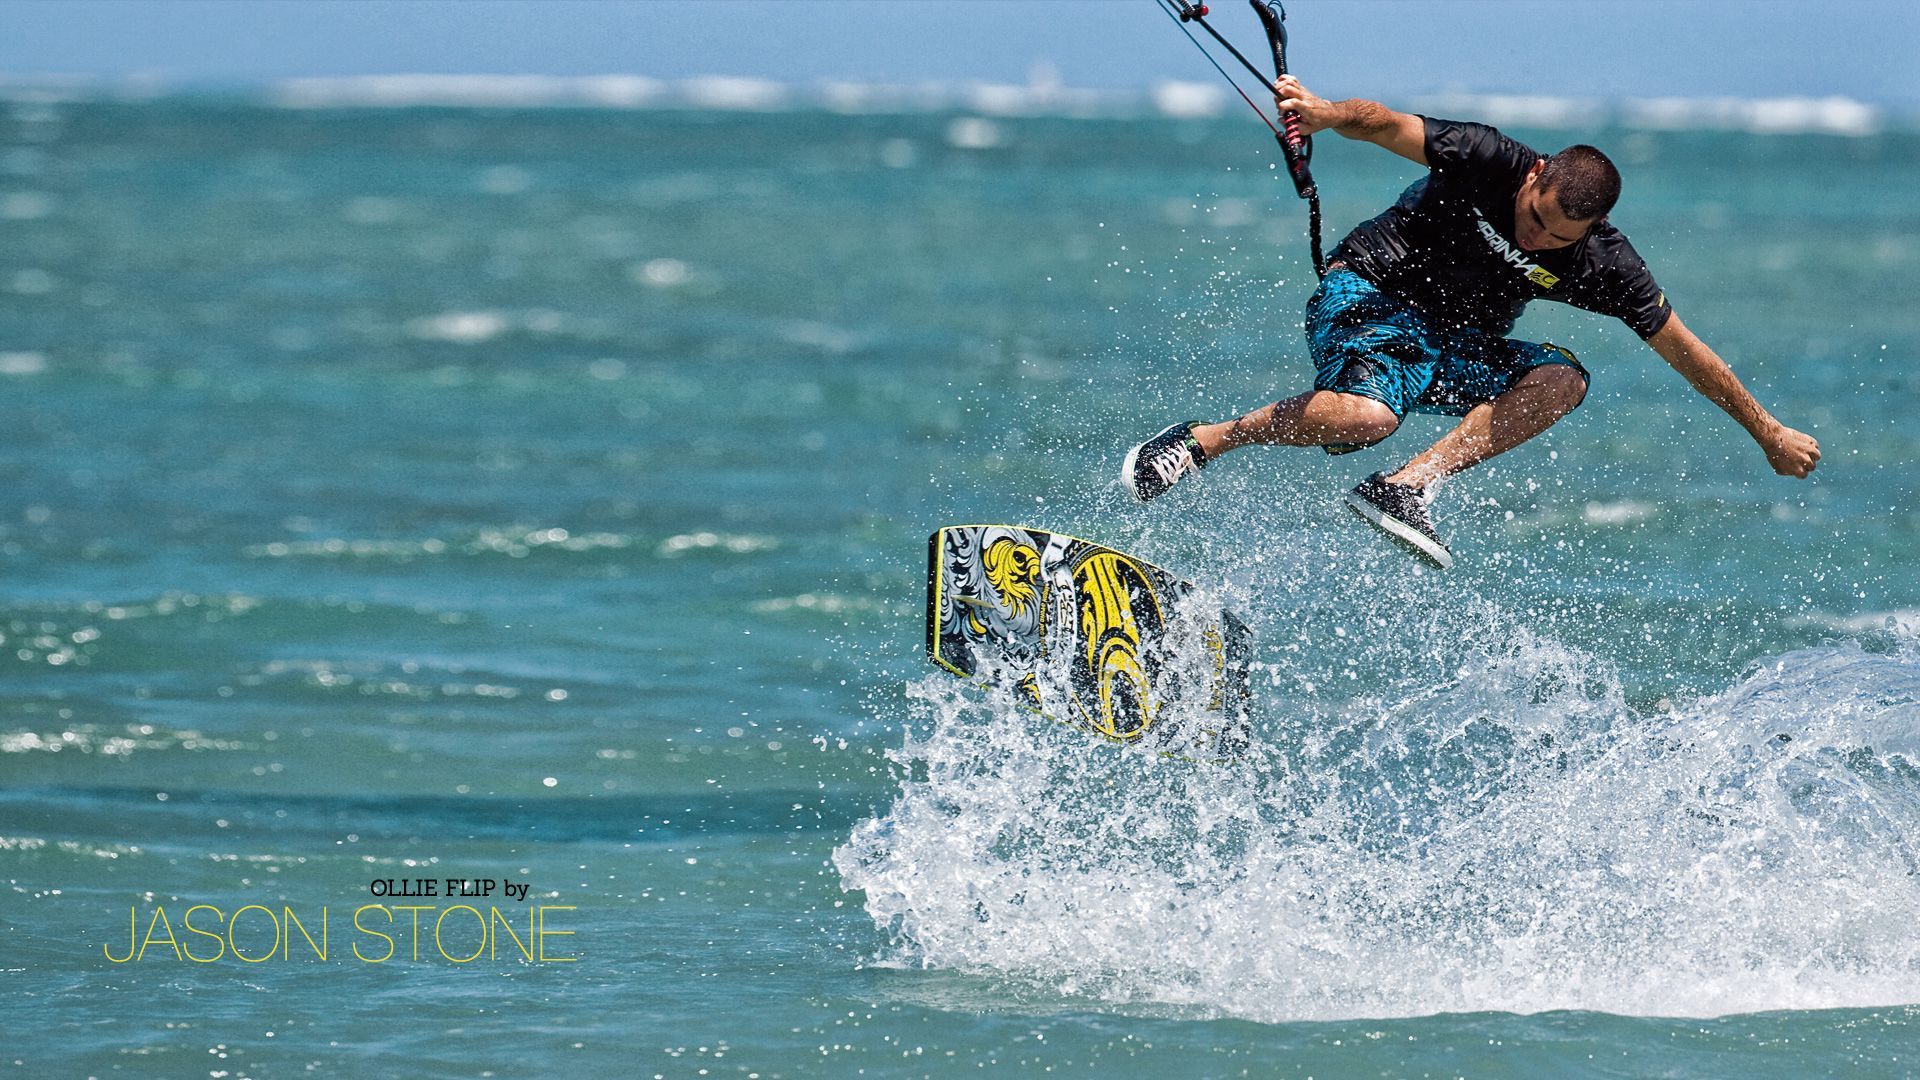 Jason Stone on the wake skate. Cabrinha kites. Kite surfing, Kiteboarding, Surfing